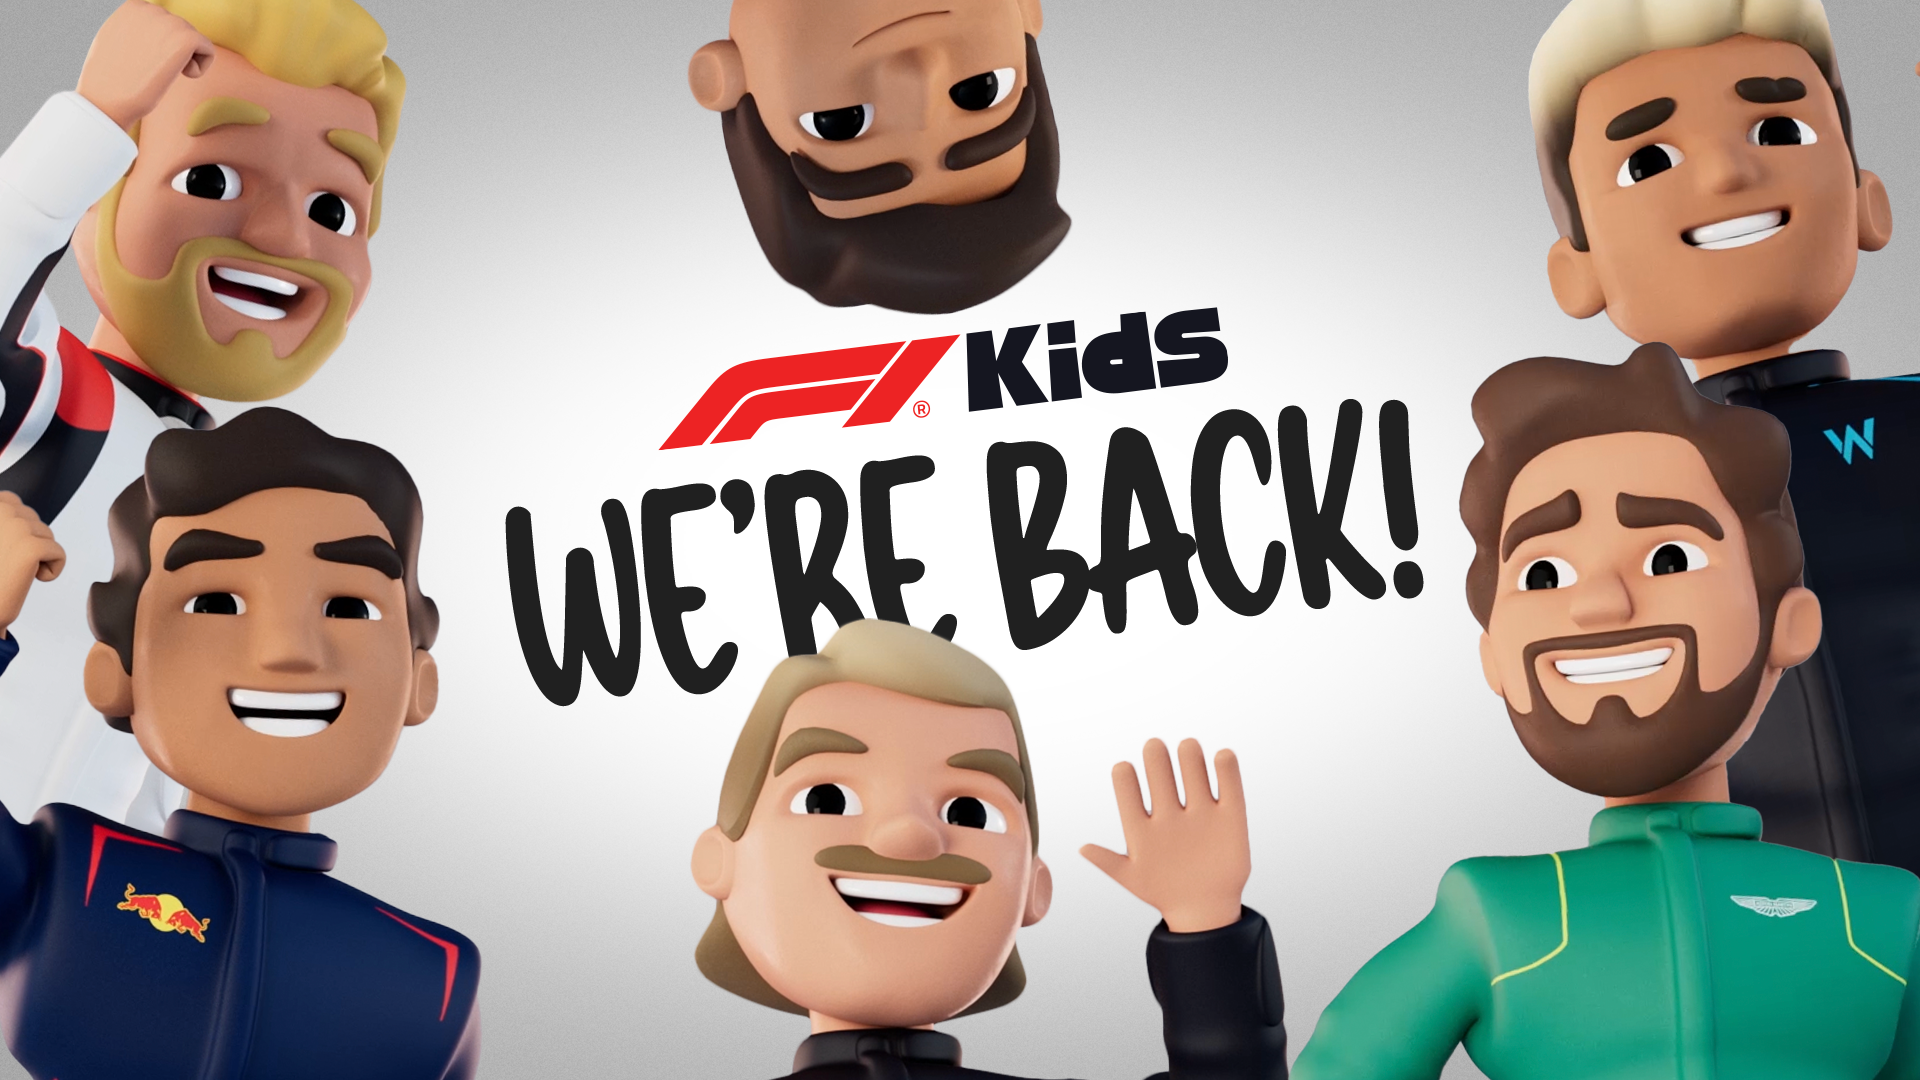 Formula 1 Plans Return of “F1 Kids” Broadcast for Singapore Grand Prix